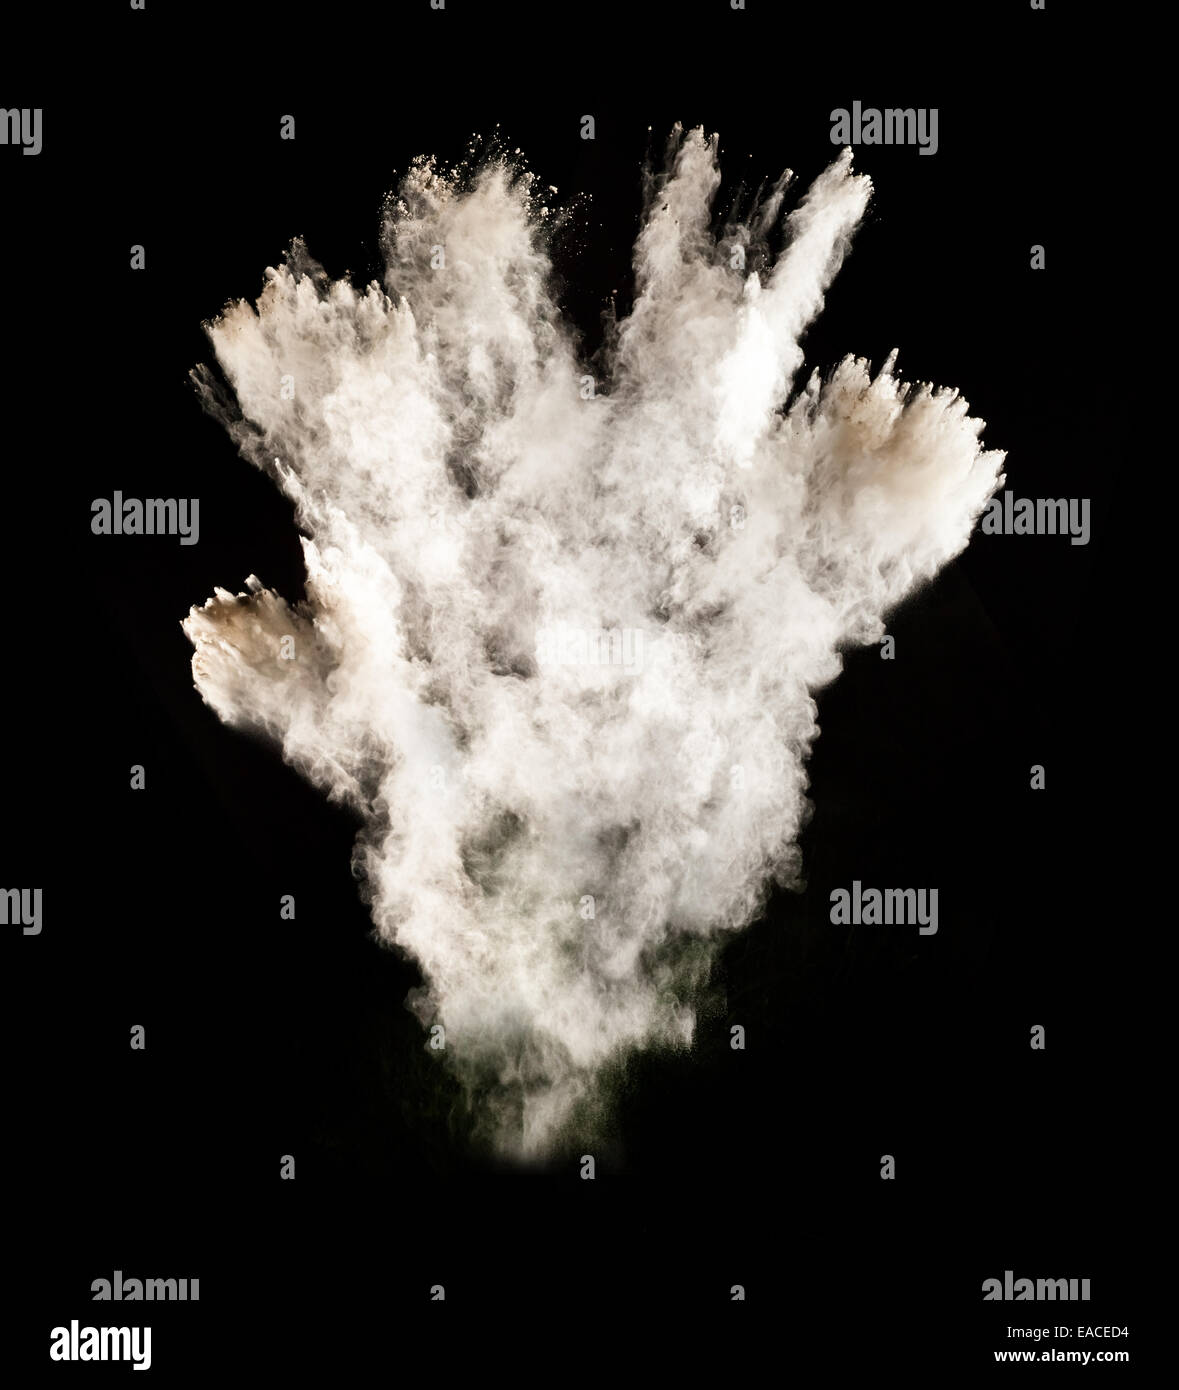 Freeze motion of white dust explosion isolated on black background Stock Photo